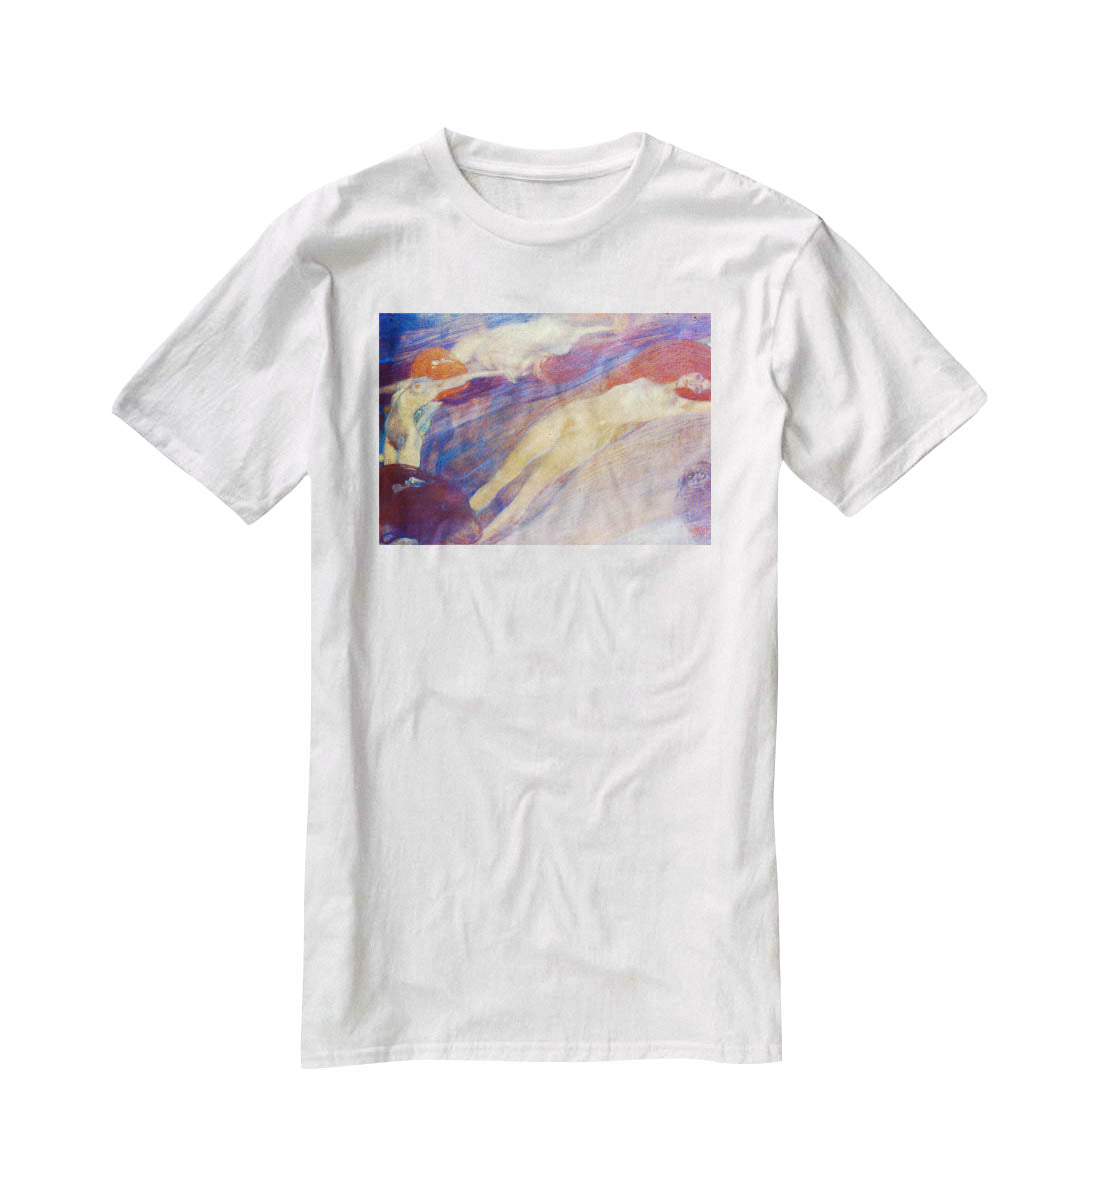 Moving water by Klimt T-Shirt - Canvas Art Rocks - 5